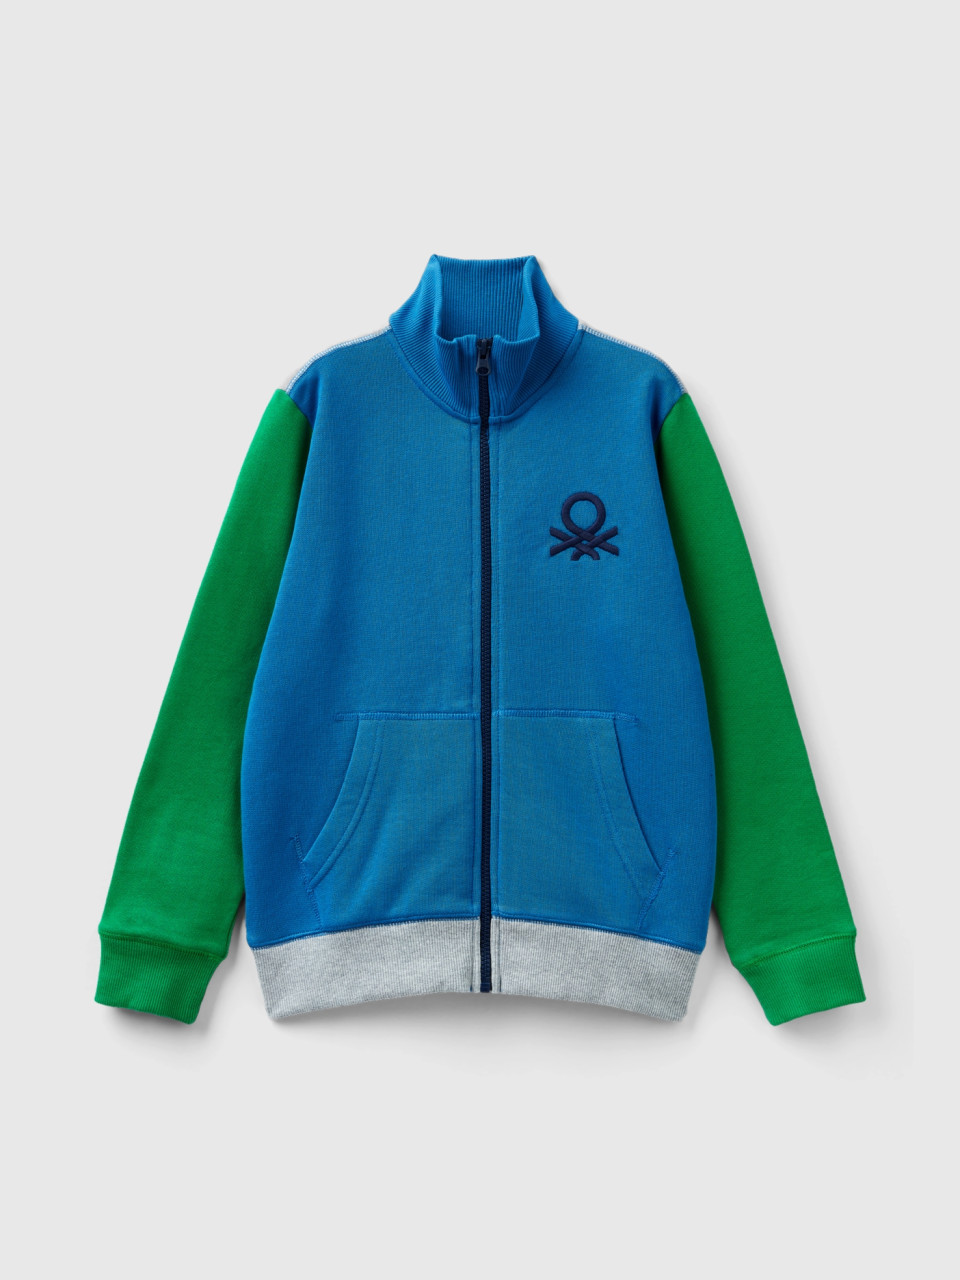 Benetton, Pure Cotton Sweatshirt With Zipper, Multi-color, Kids